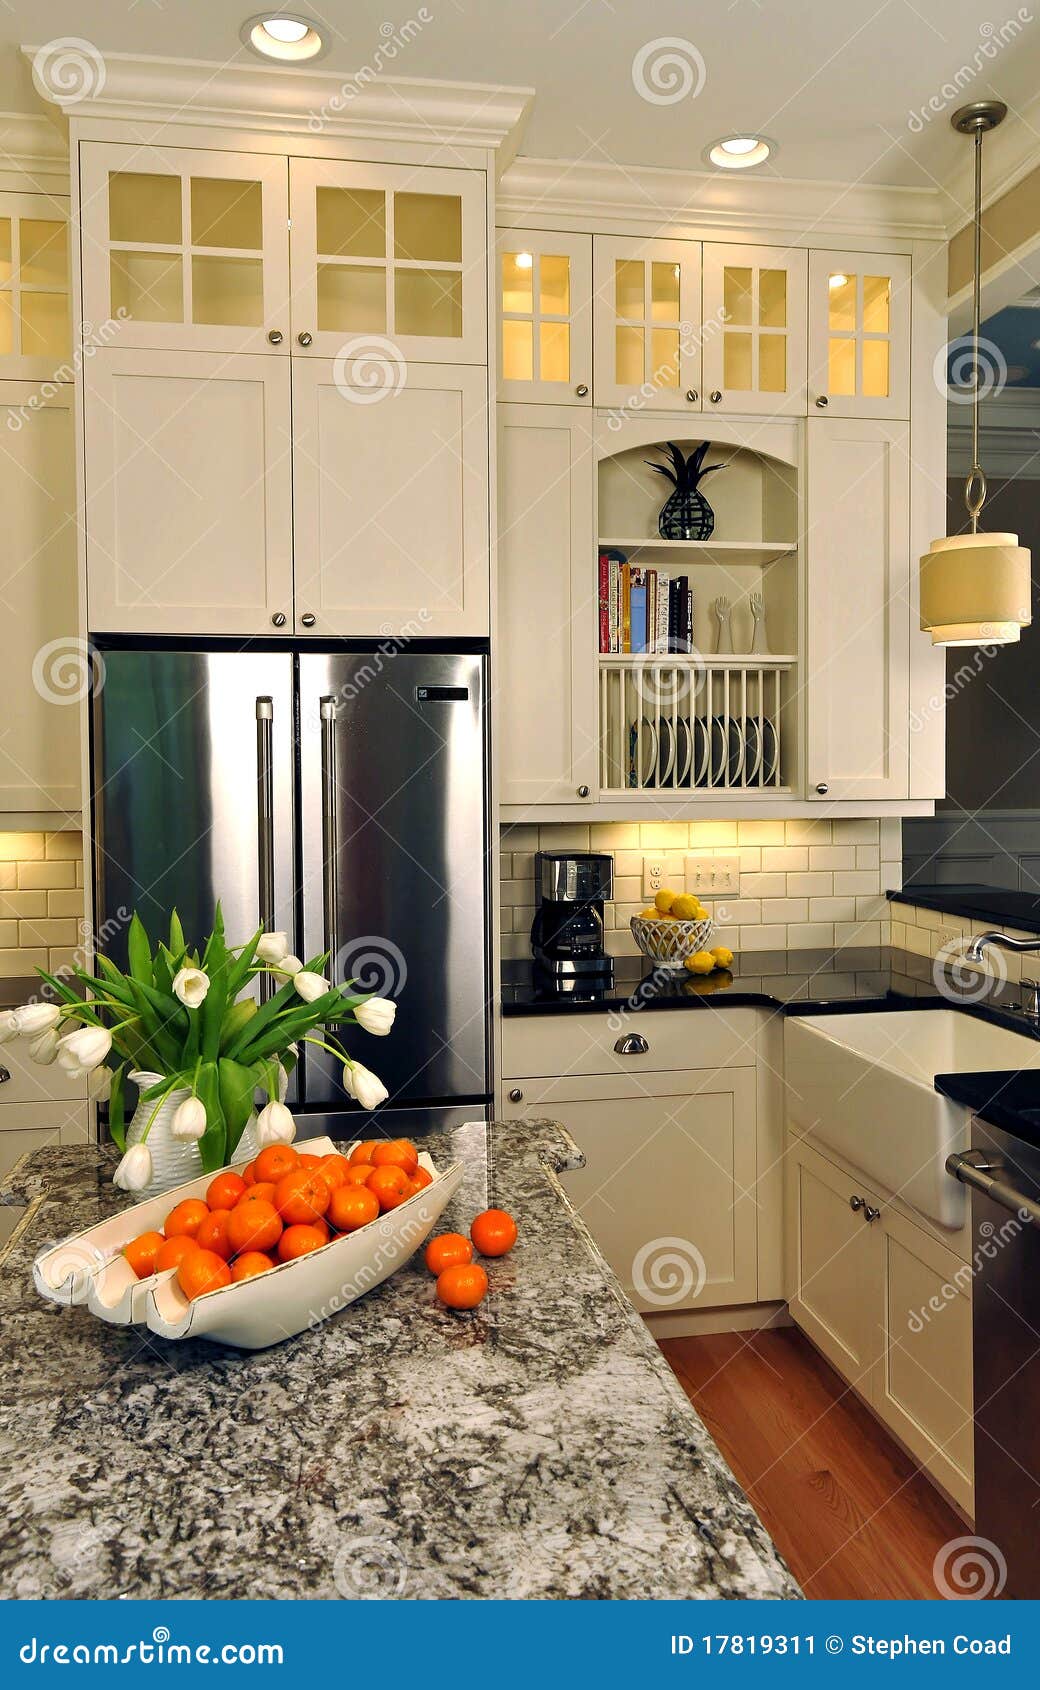 Spacious classic kitchen stock image. Image of orange - 17819311